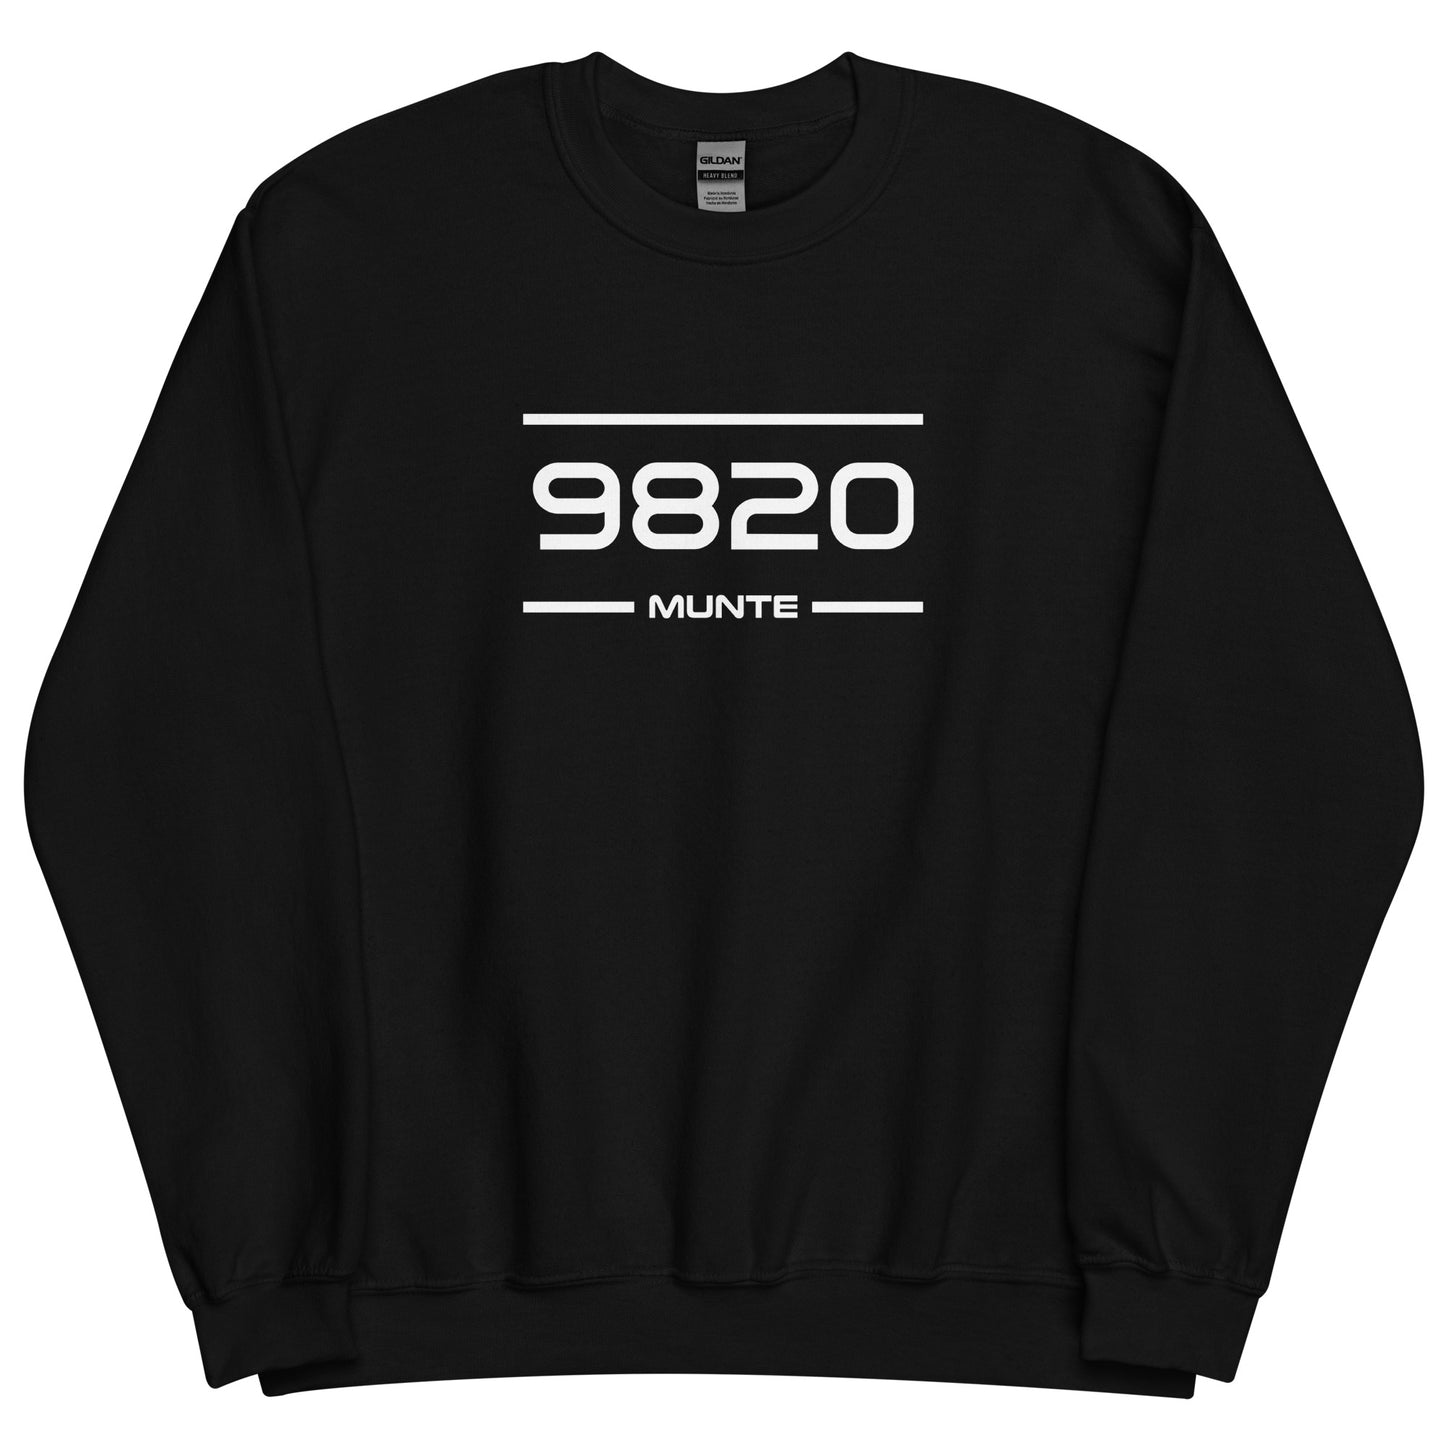 Sweater - 9820 - Munte (M/V)